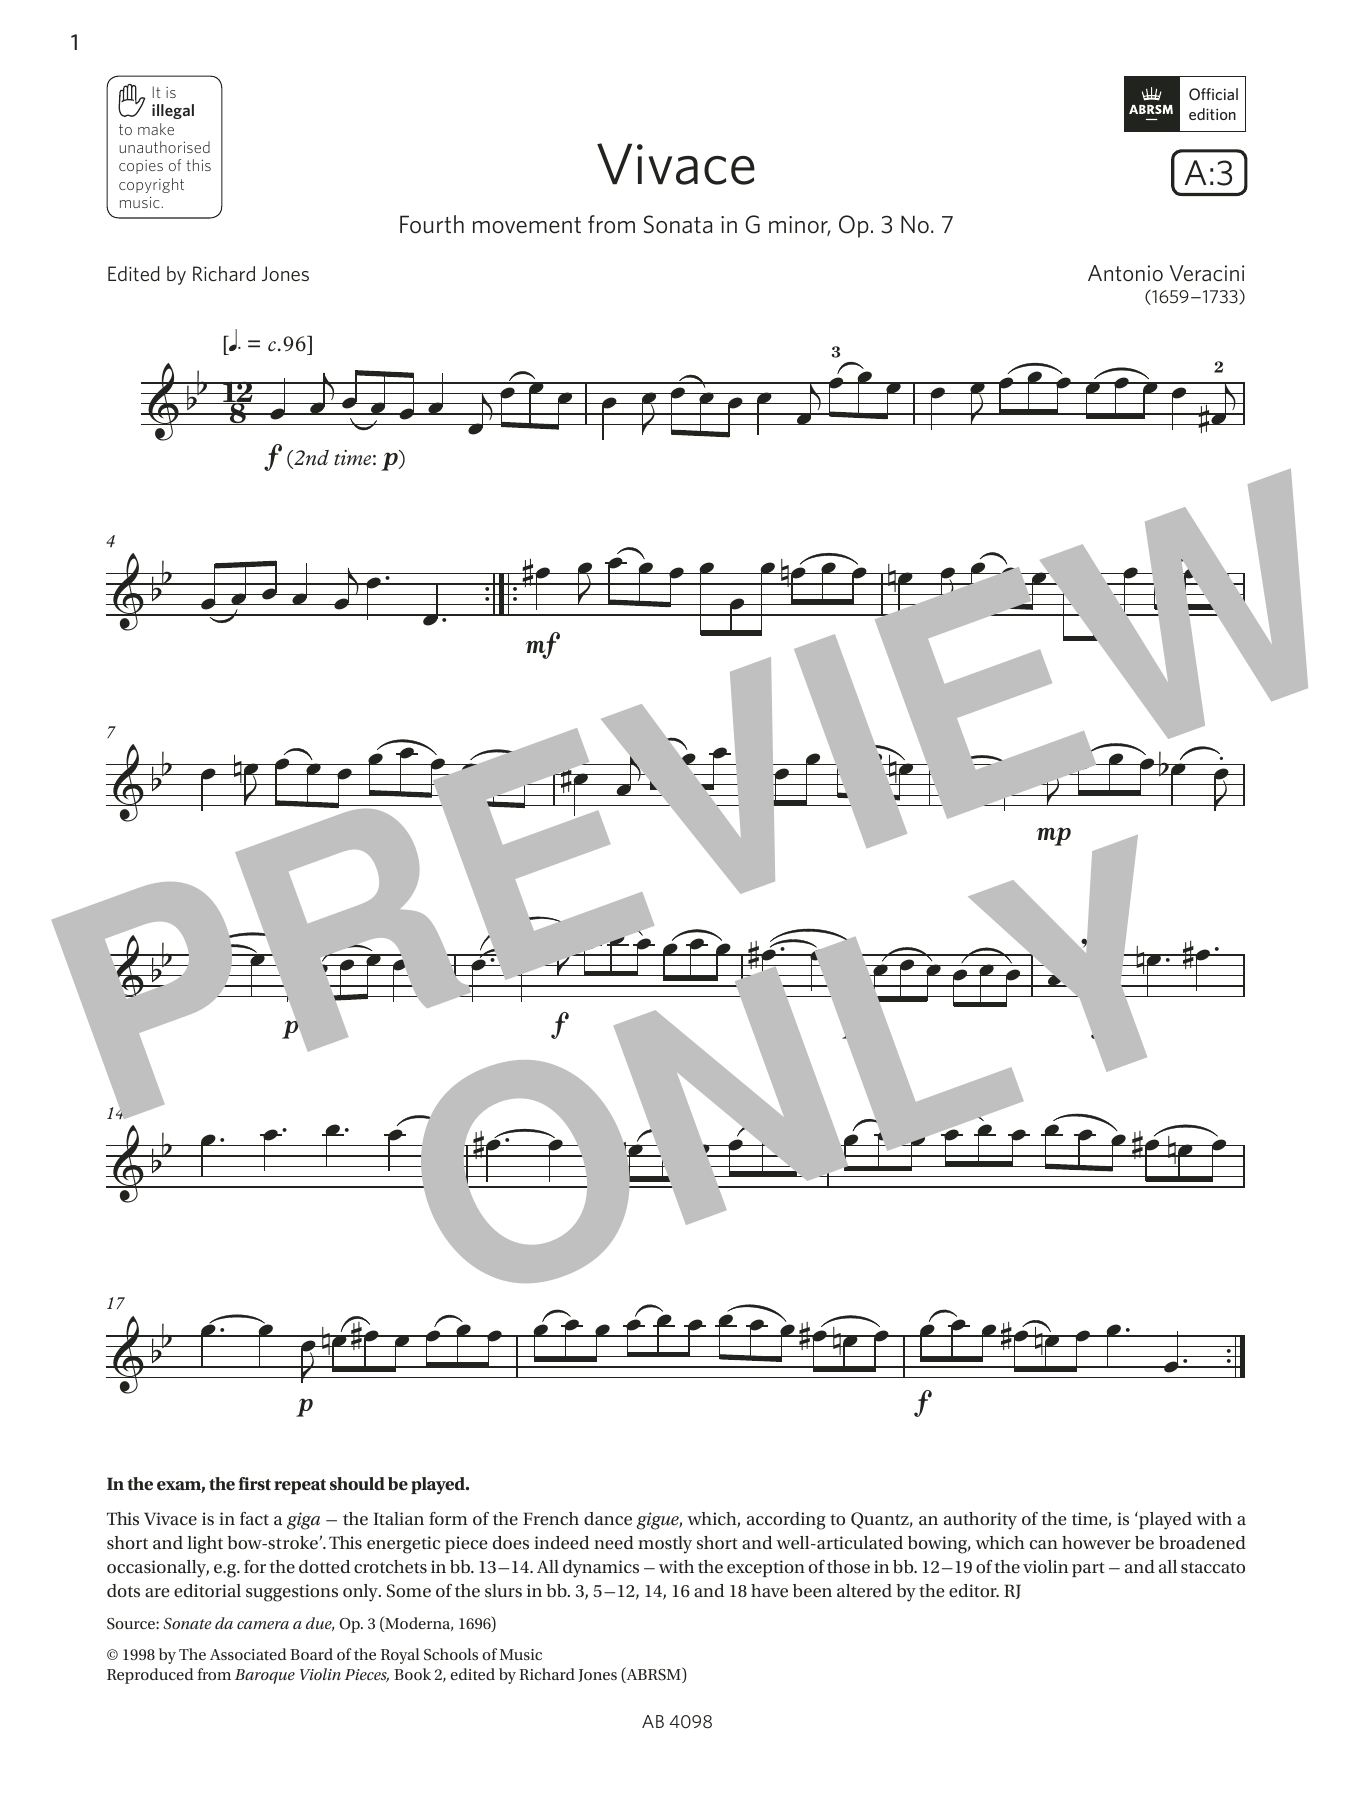 Download Antonio Veracini Vivace (Grade 4, A3, from the ABRSM Vio Sheet Music